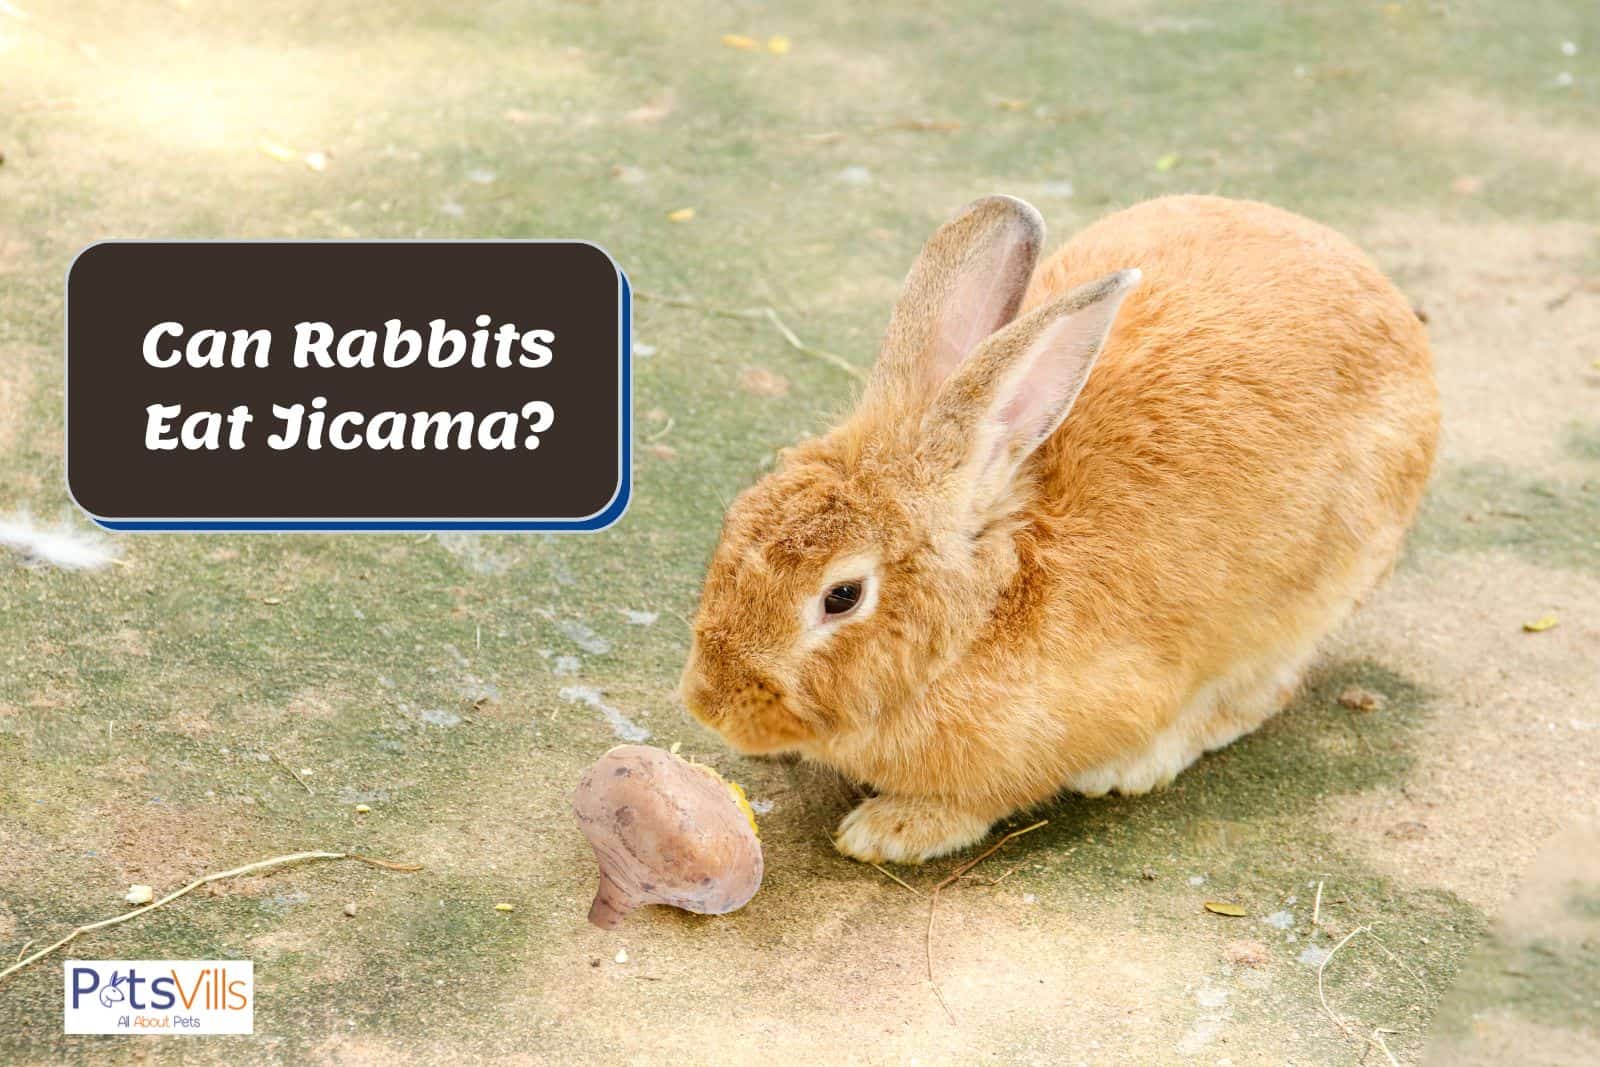 rabbit is trying to eat jicama but can rabbits eat jicama